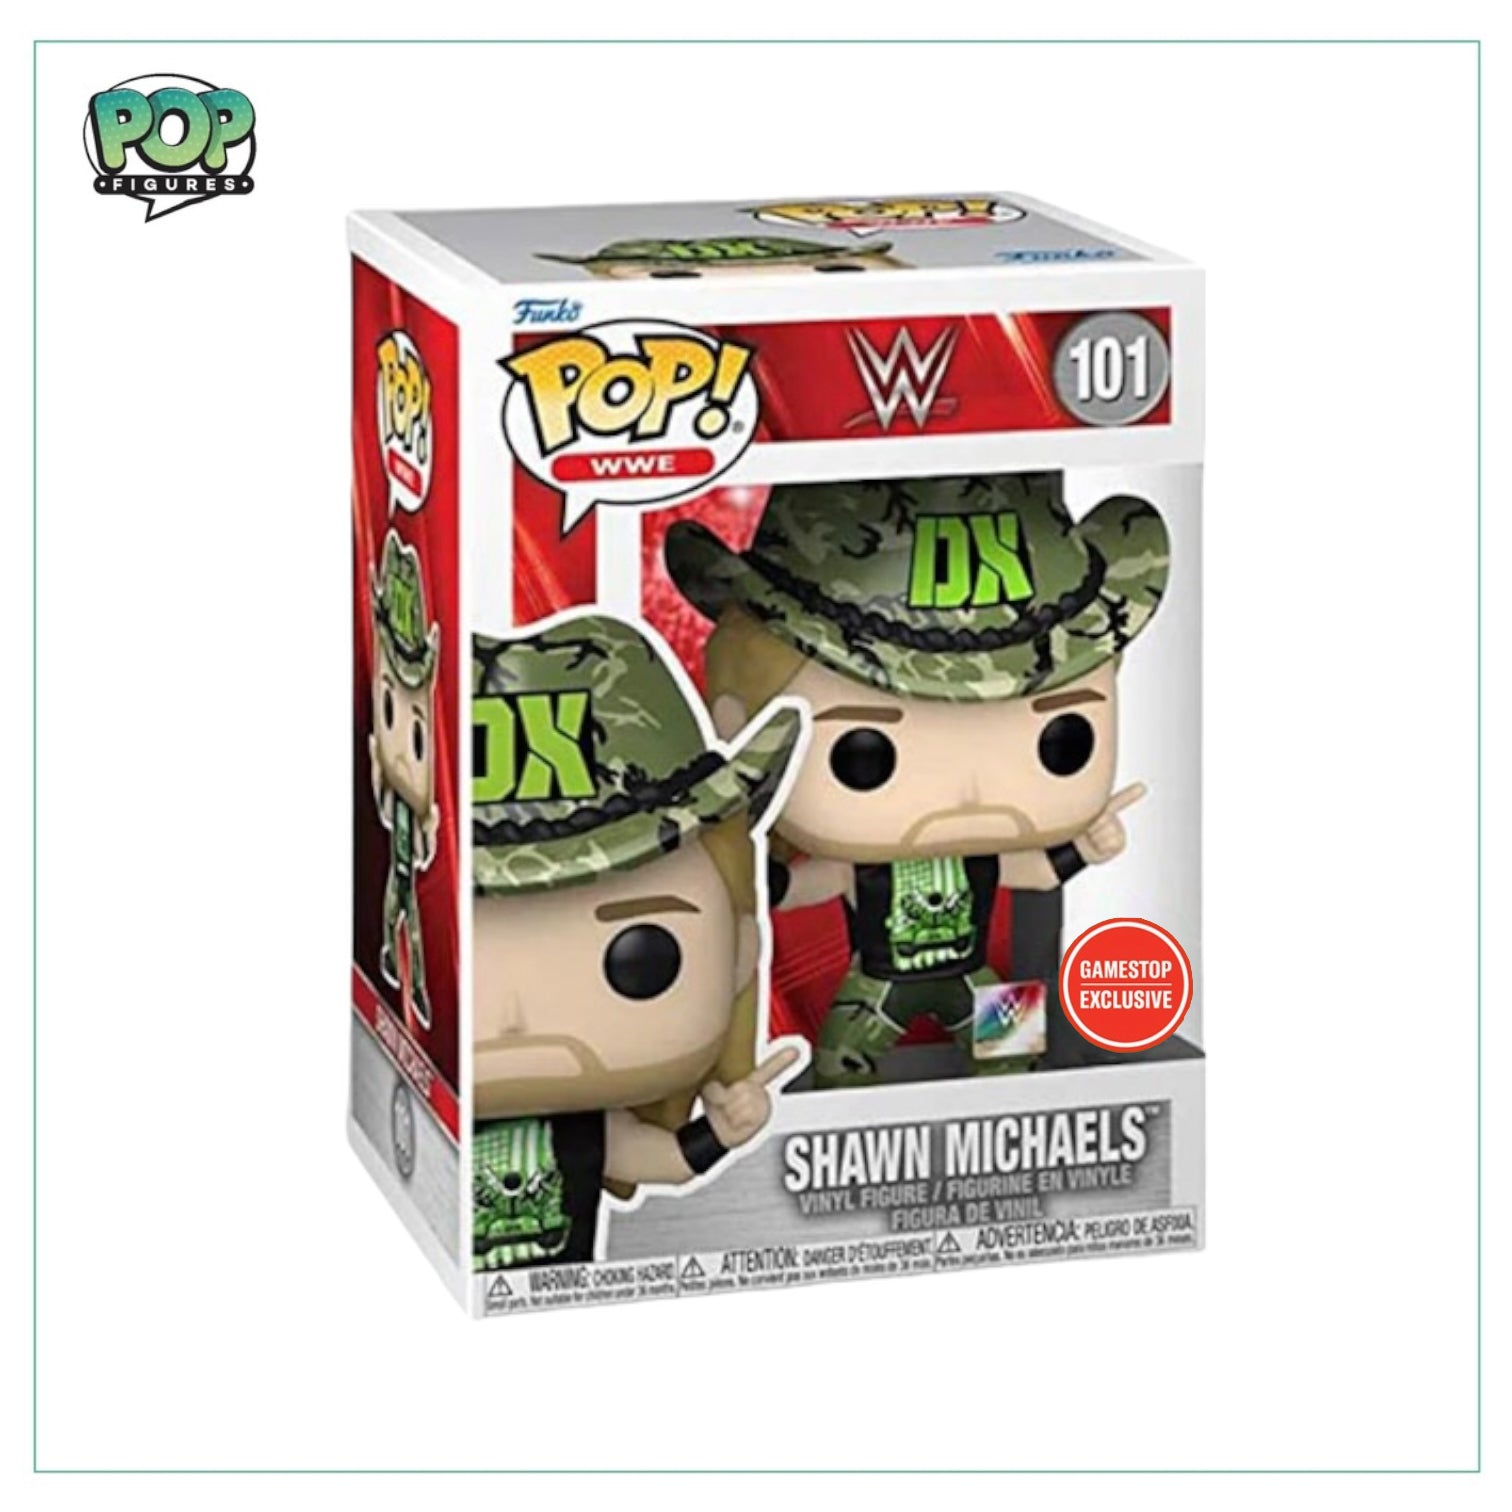 Shawn Michaels #101 Funko Pop! - WWE - GameStop Exclusive